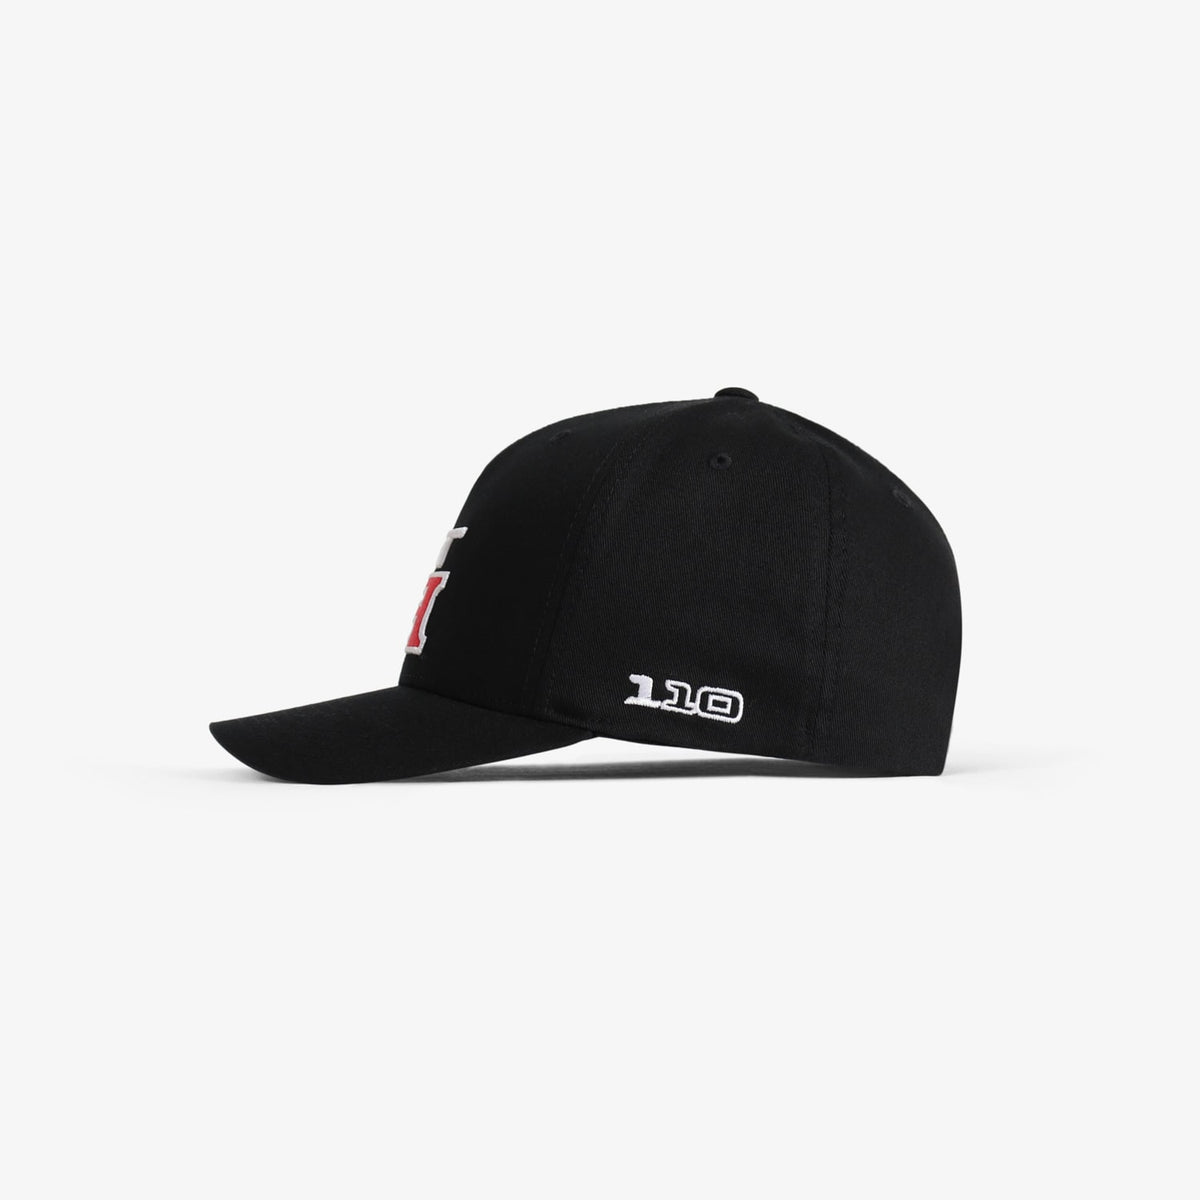 TT-R Hat Black